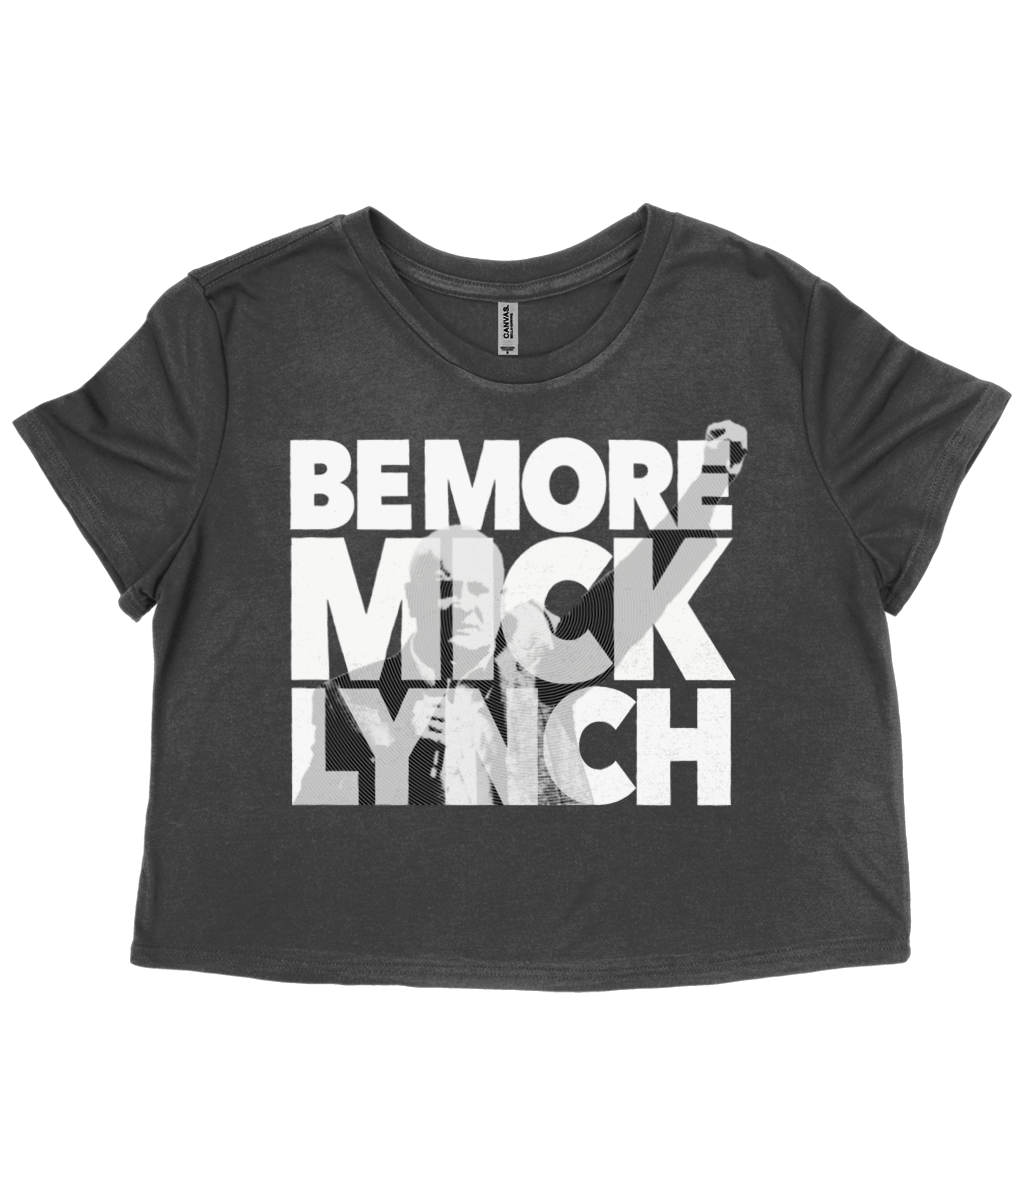 Be More Mick Lynch Cropped T-Shirt – Light on dark